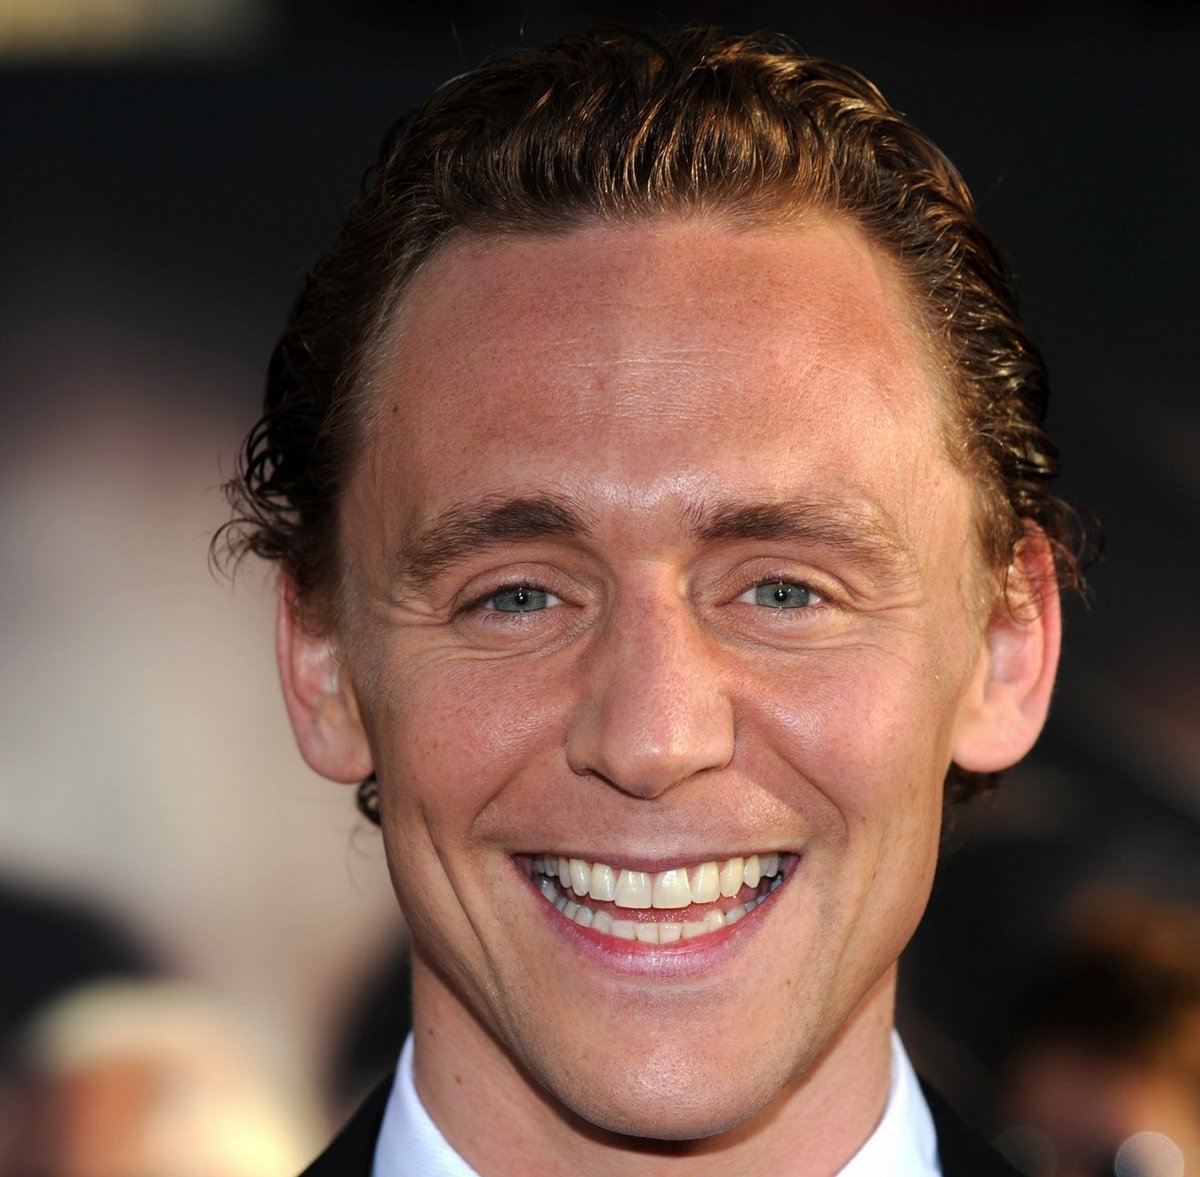 RT @jakelinesanders: Tom at Thor Premiere 2011 and Loki Premiere 2021
#TomHiddleston #Loki https://t.co/tynSewITdU